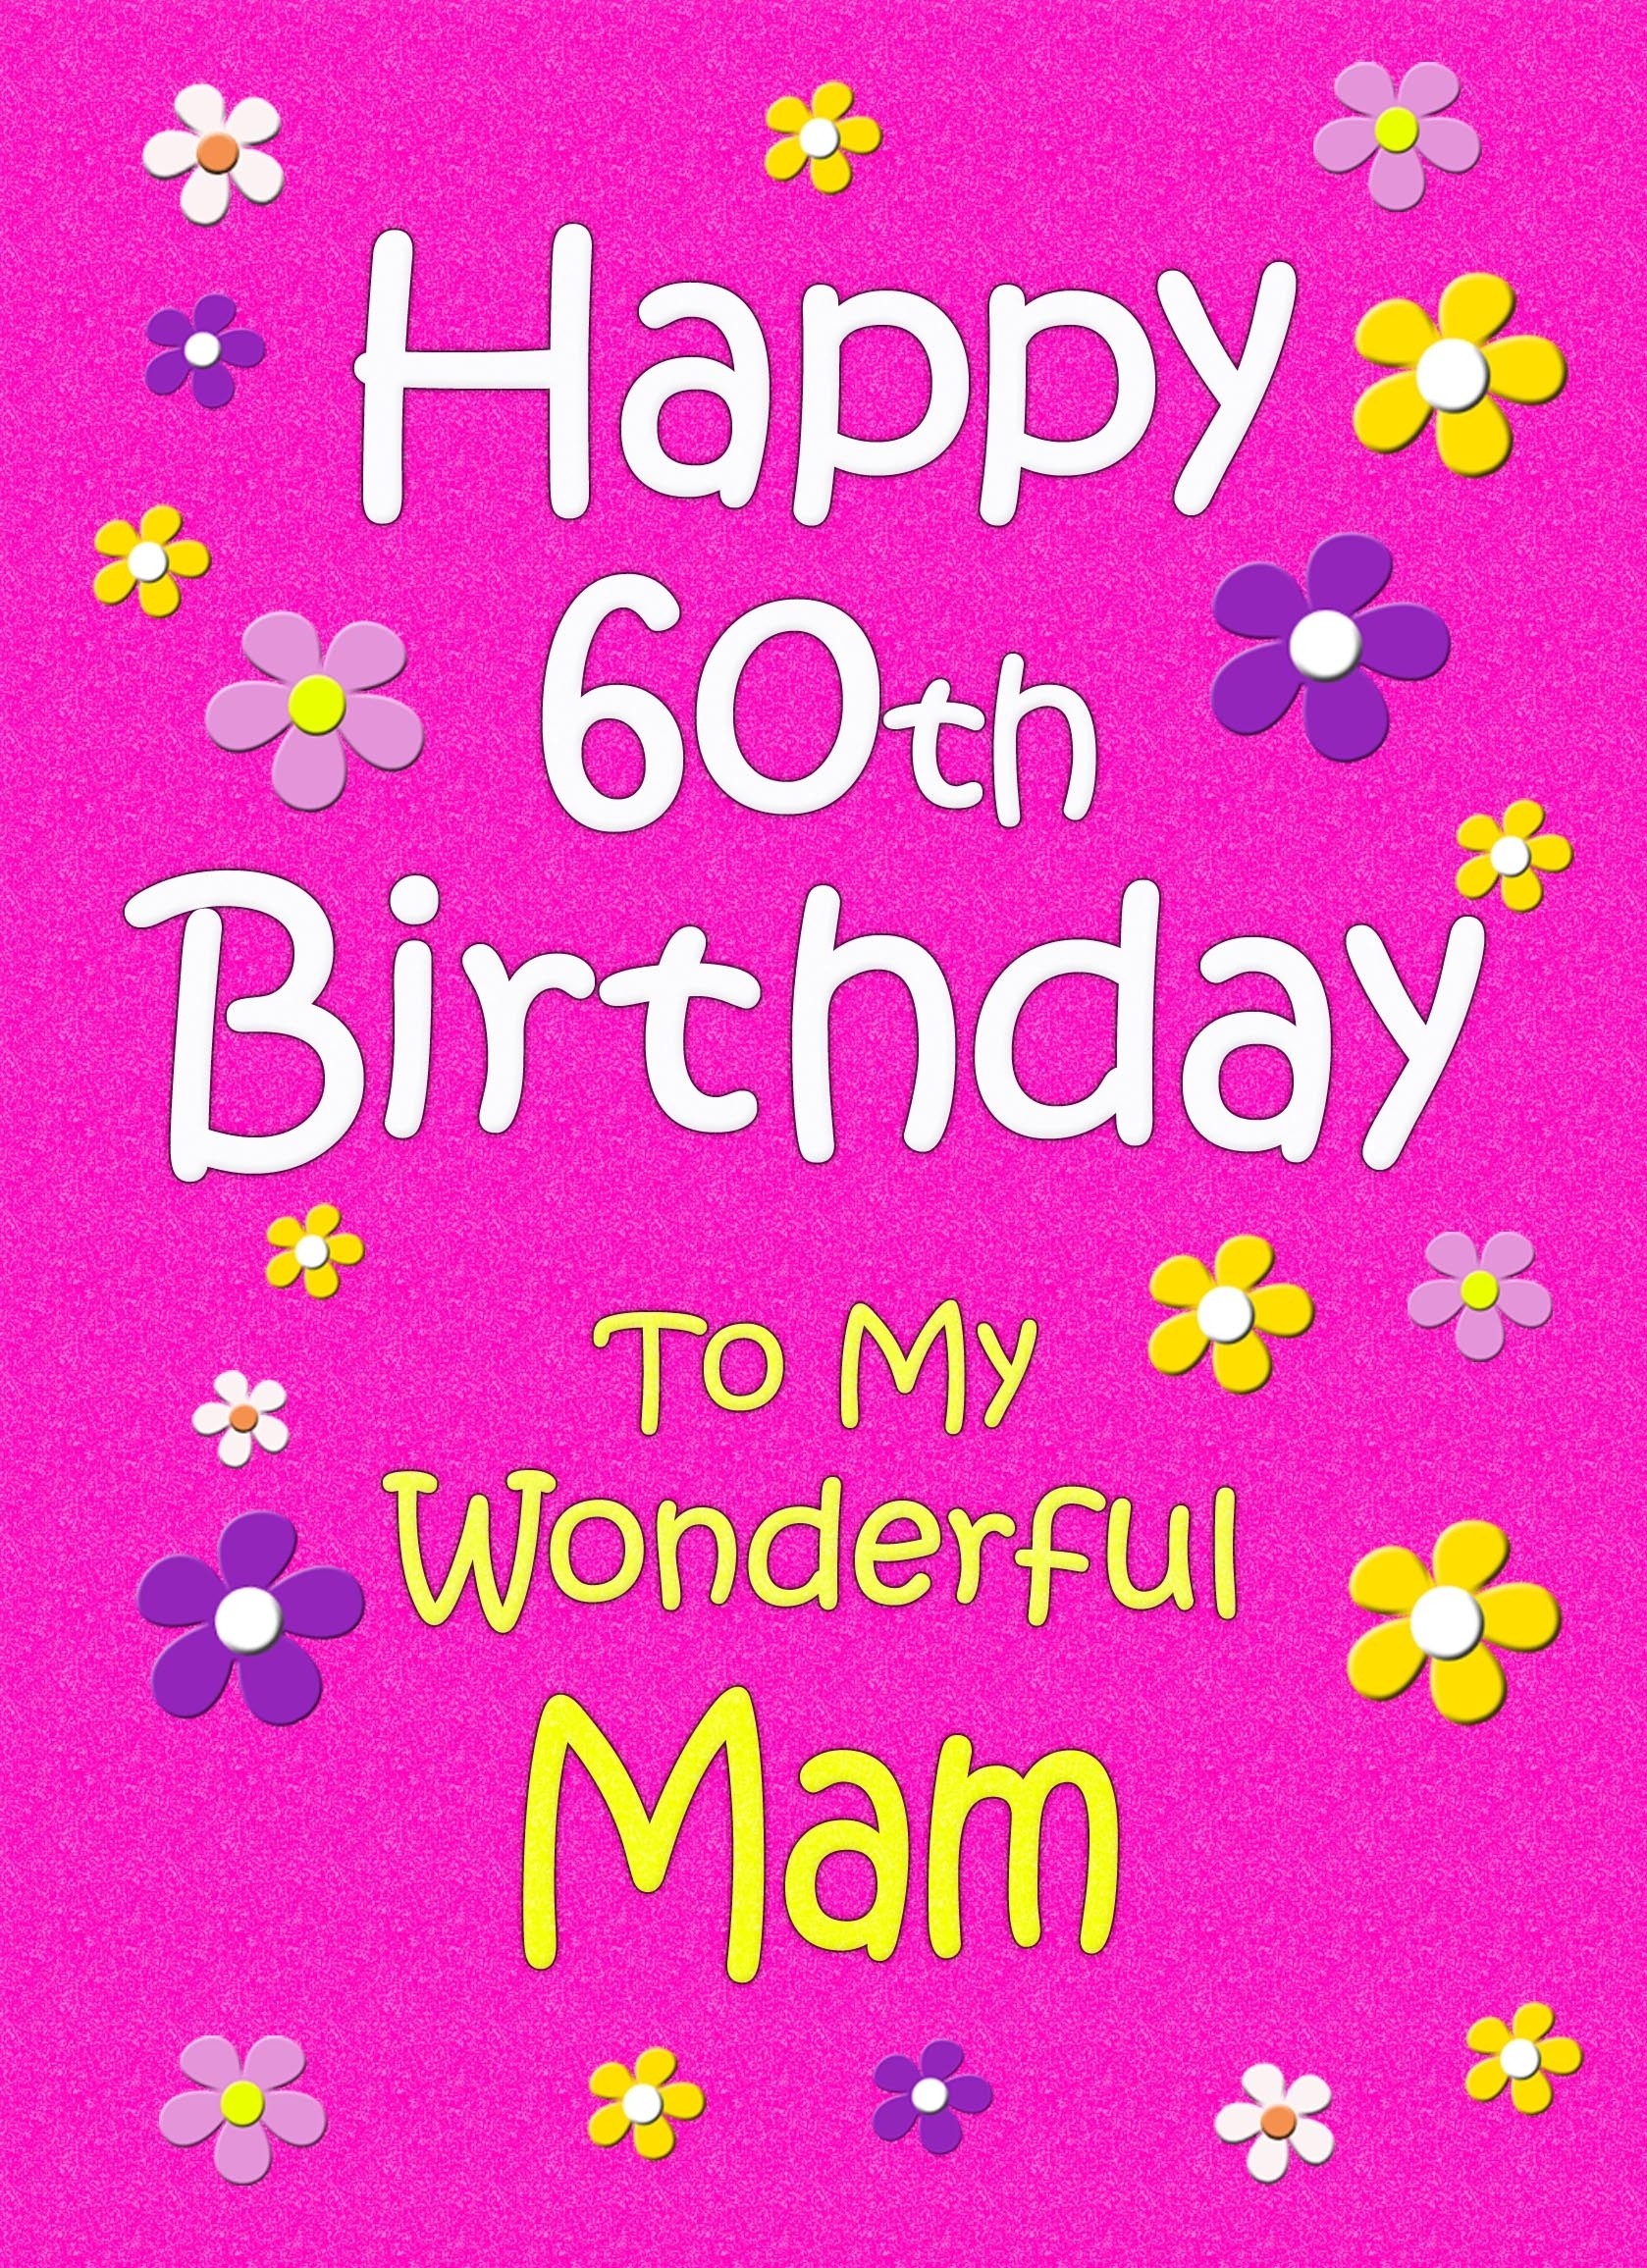 Mam 60th Birthday Card (Pink)